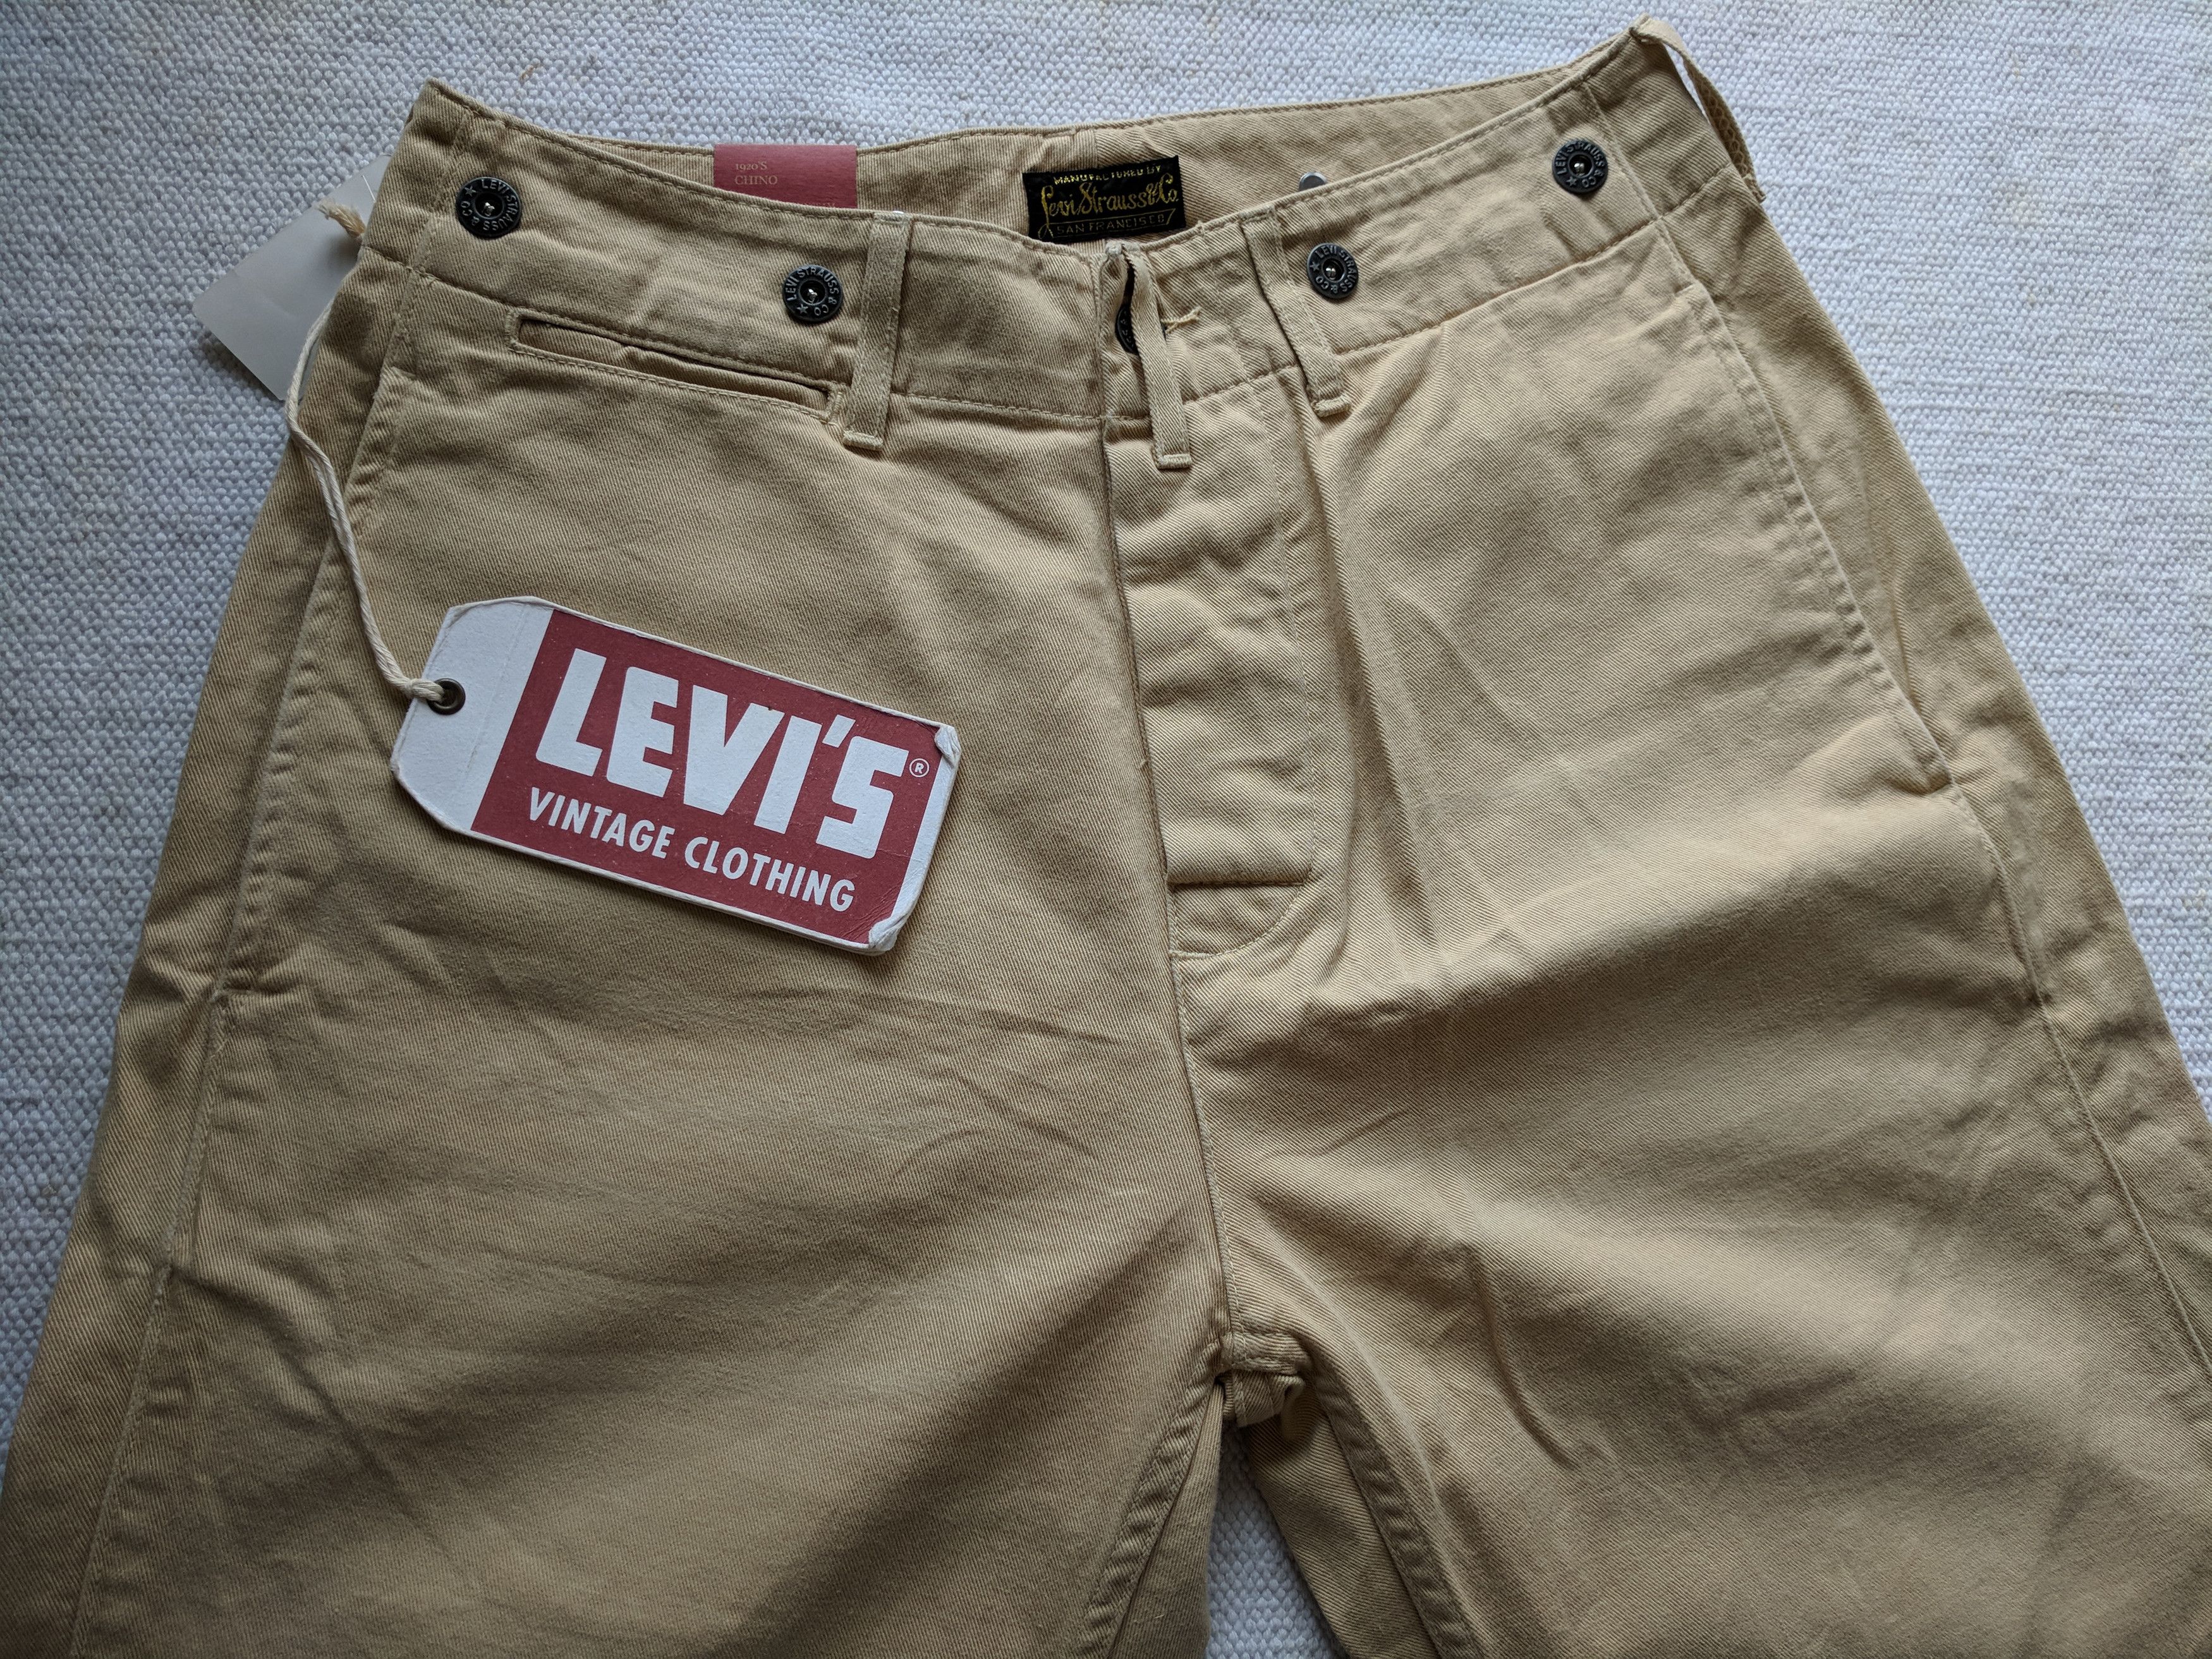 Levi's Levis LVC vintage clothing San Francisco deadstock khakis chino 1920s style pants size 29 30 Size US 29 - 4 Thumbnail